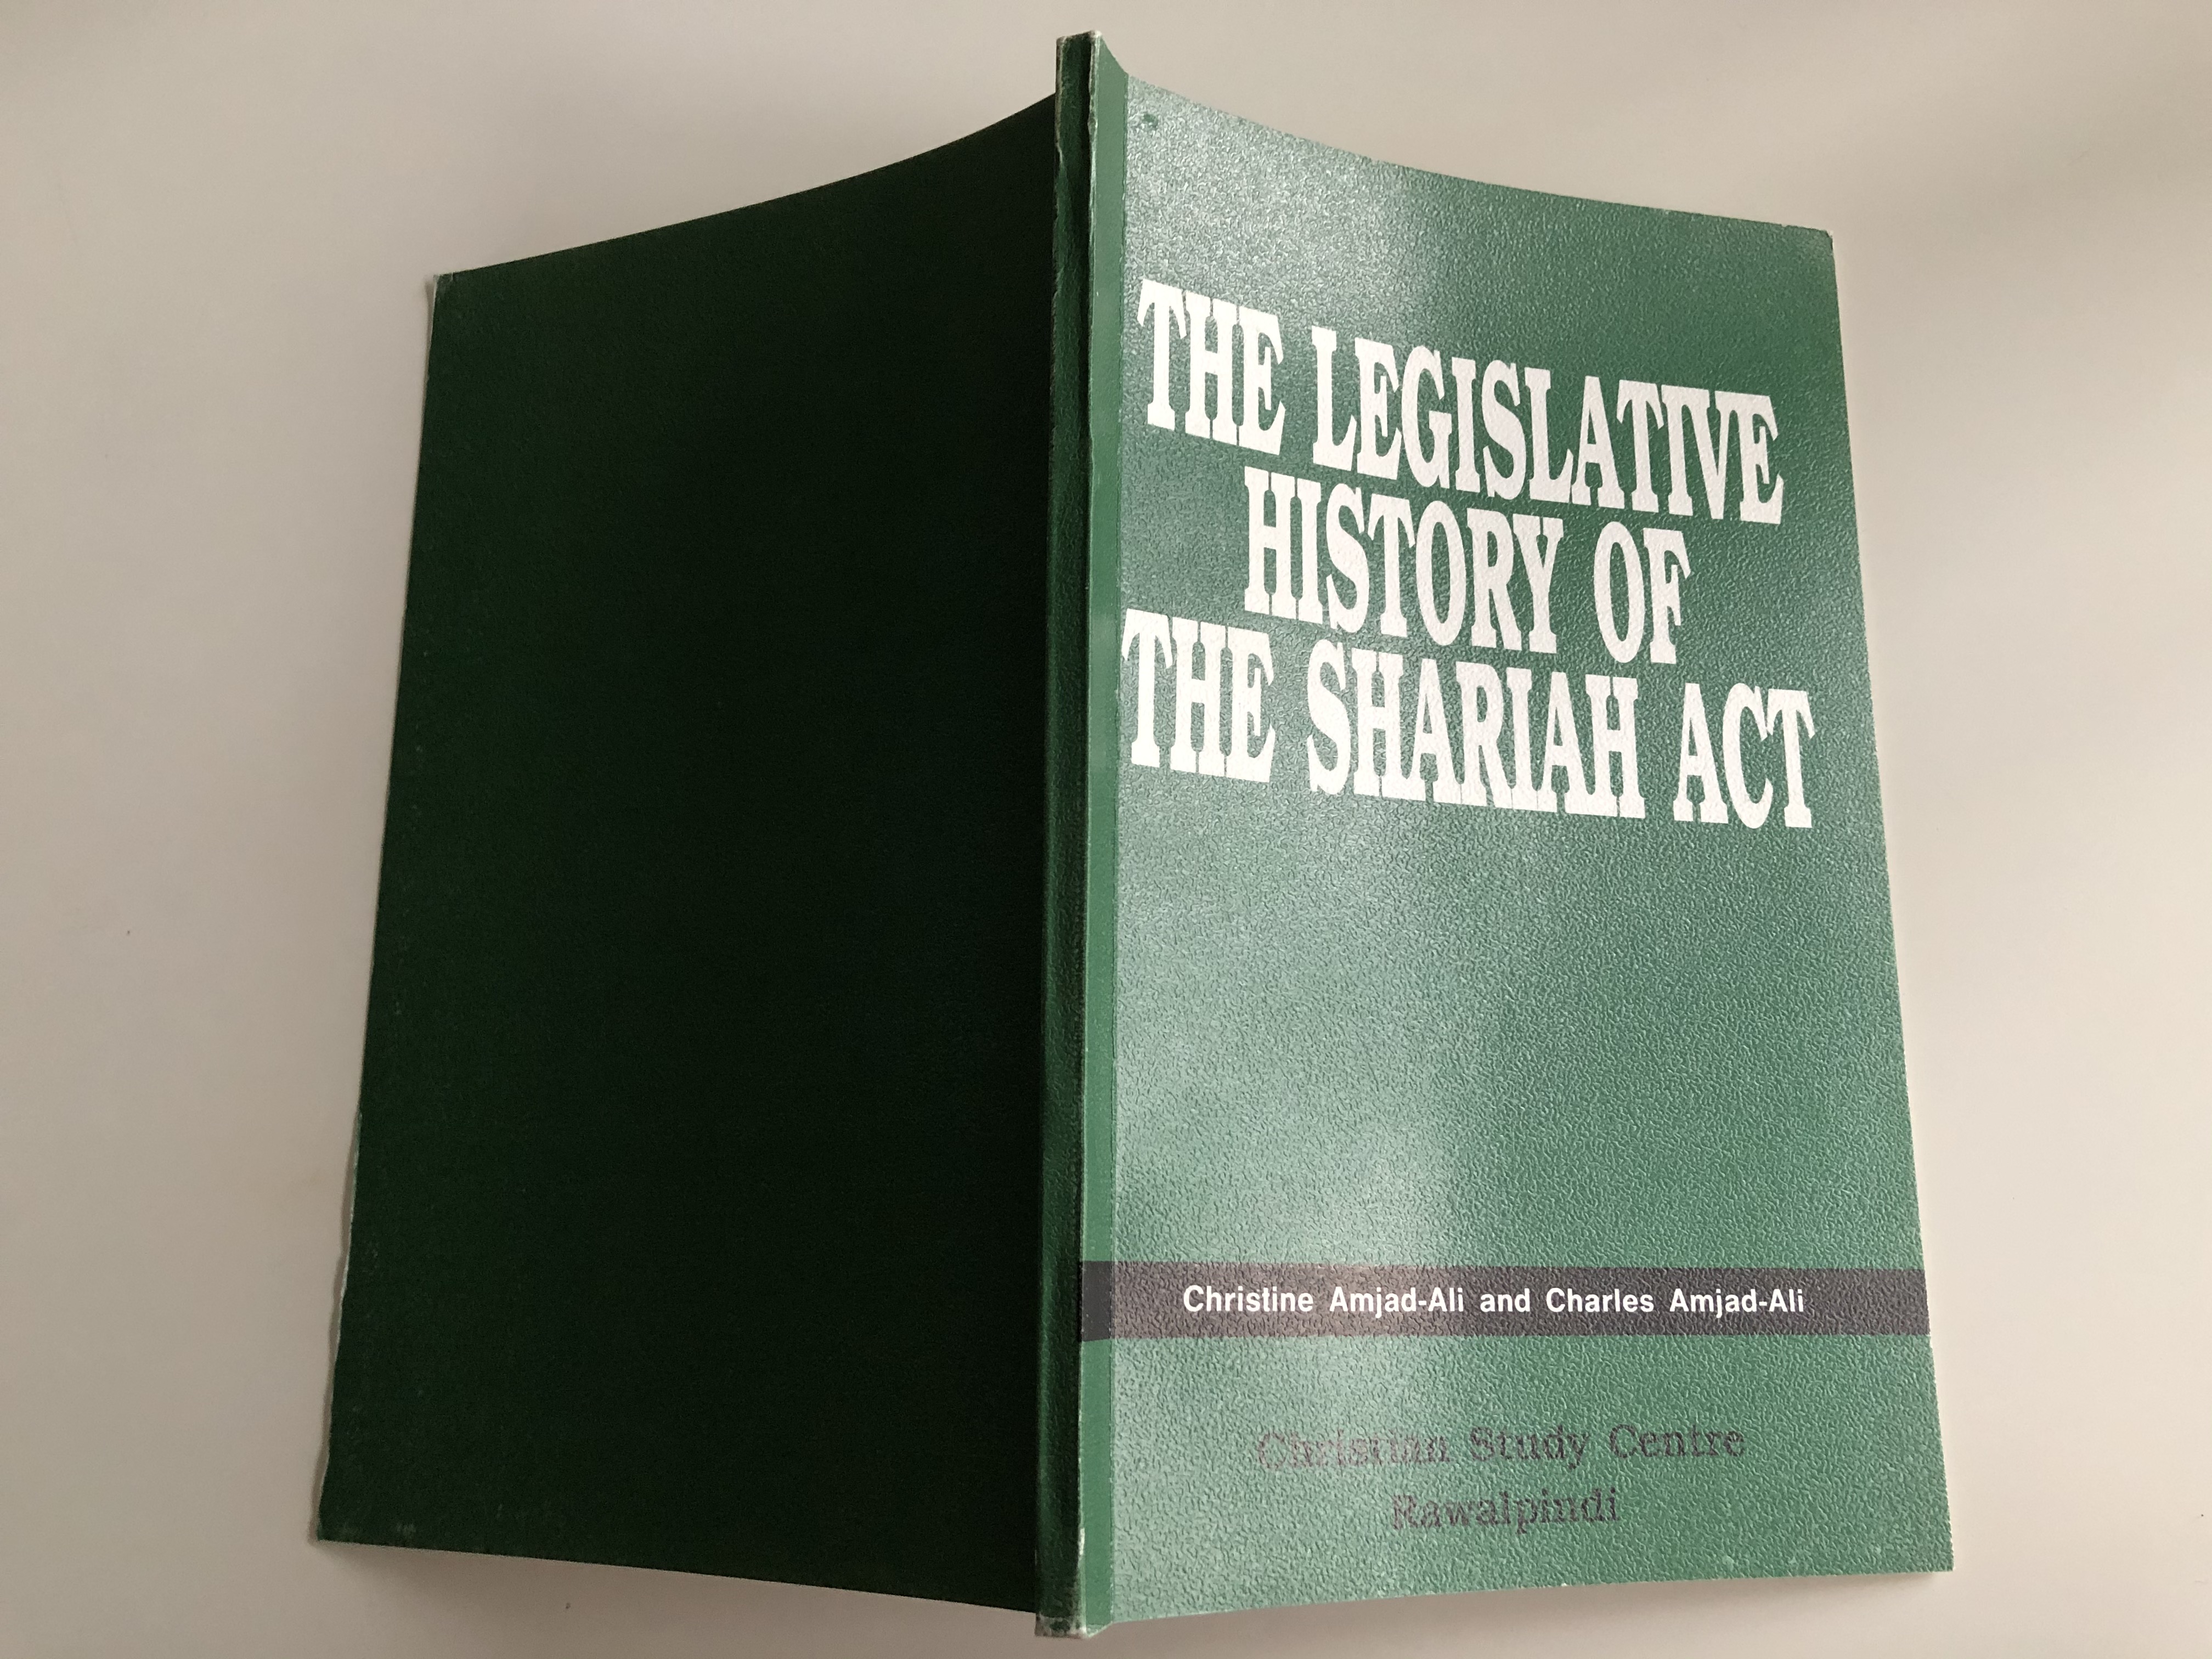 the-legislative-history-of-the-shariah-act-by-christine-amjad-ali-and-charles-amjad-ali-10-.jpg